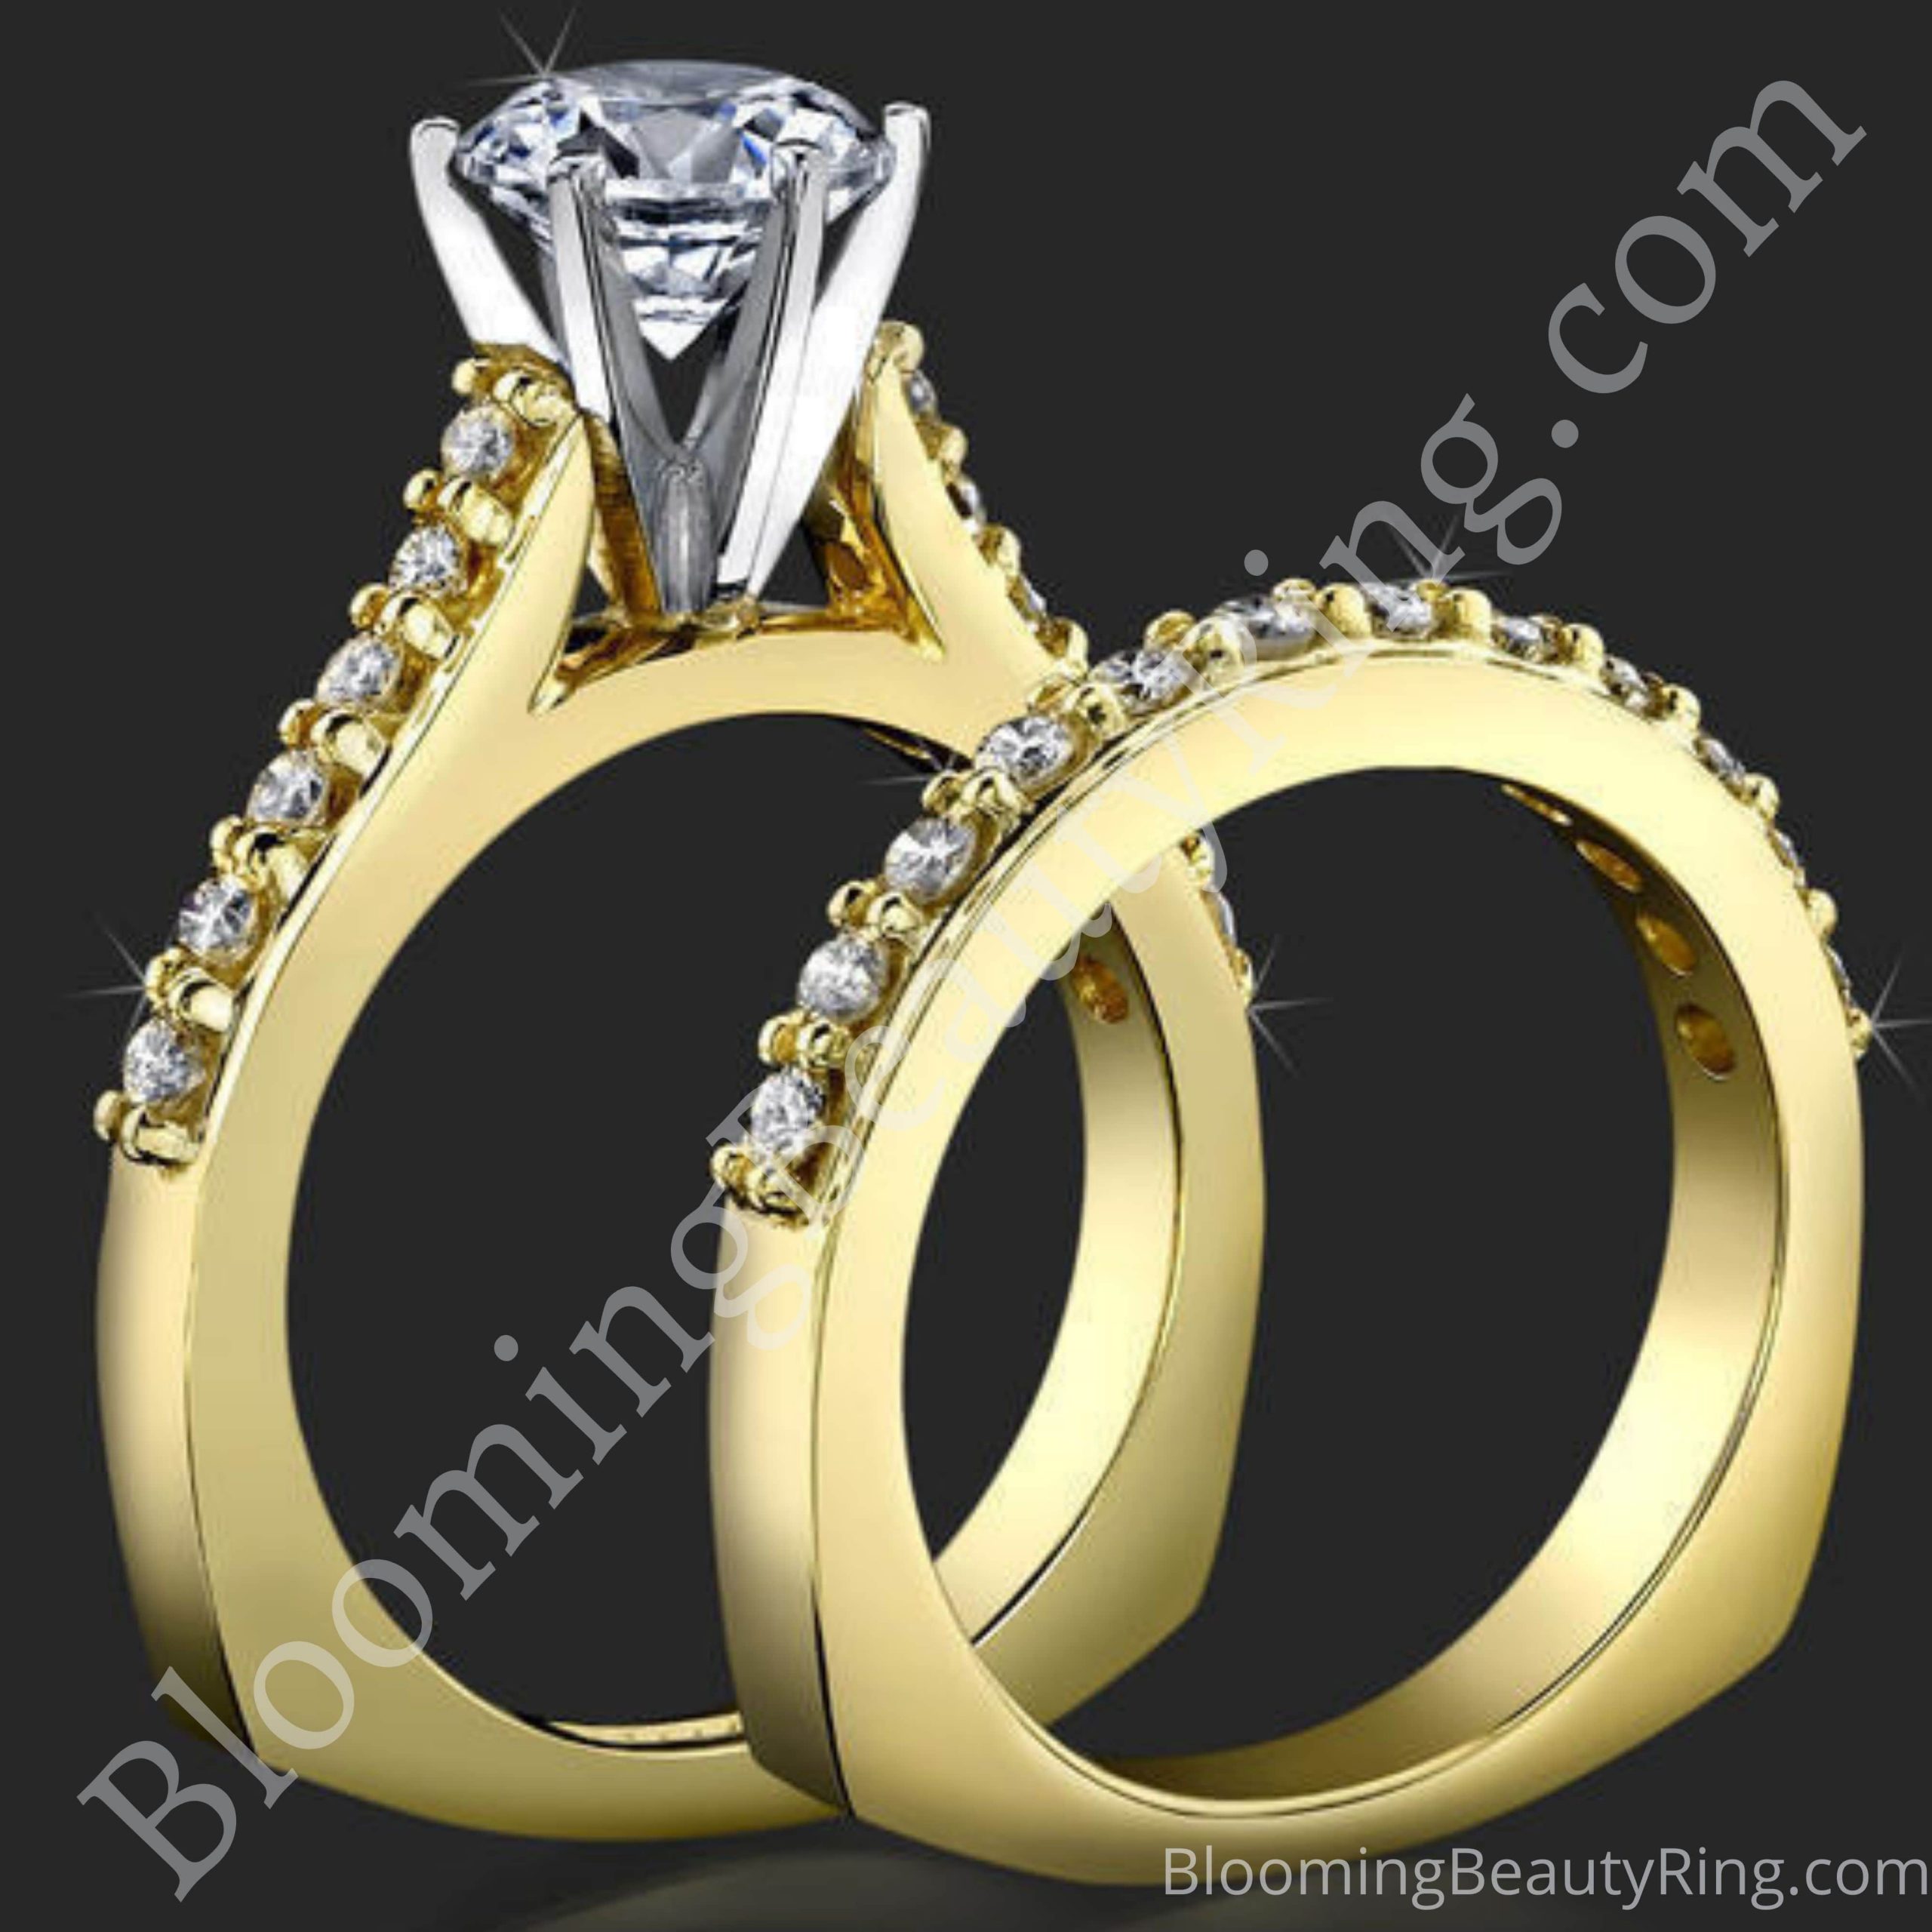 Raised Step Prong Round Diamond Engagement Ring Set with Flat Rounded Bottom Band